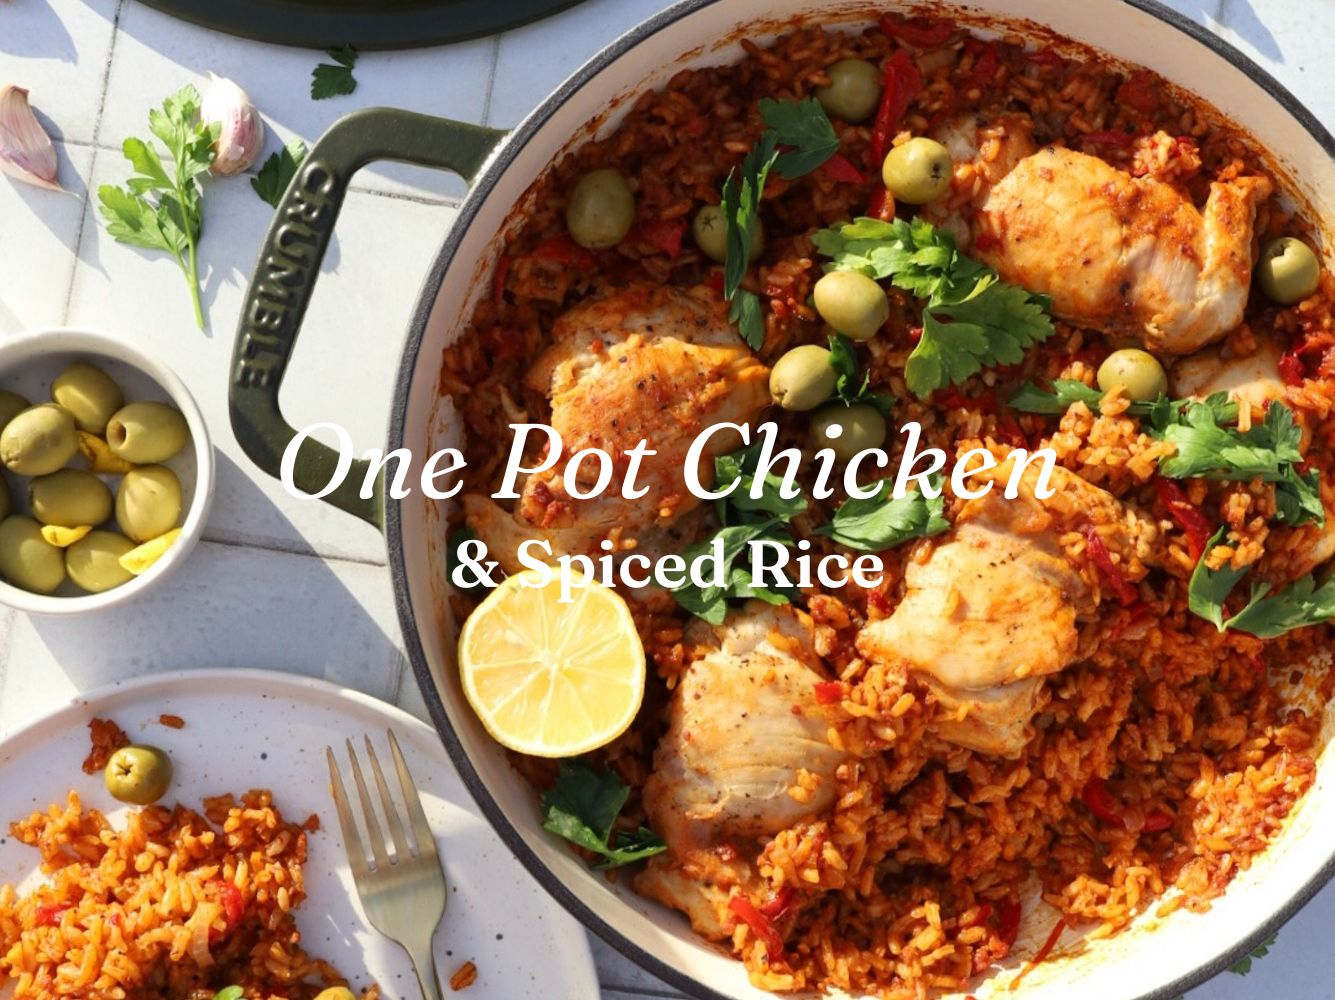 One Pot Chicken & Spiced Rice